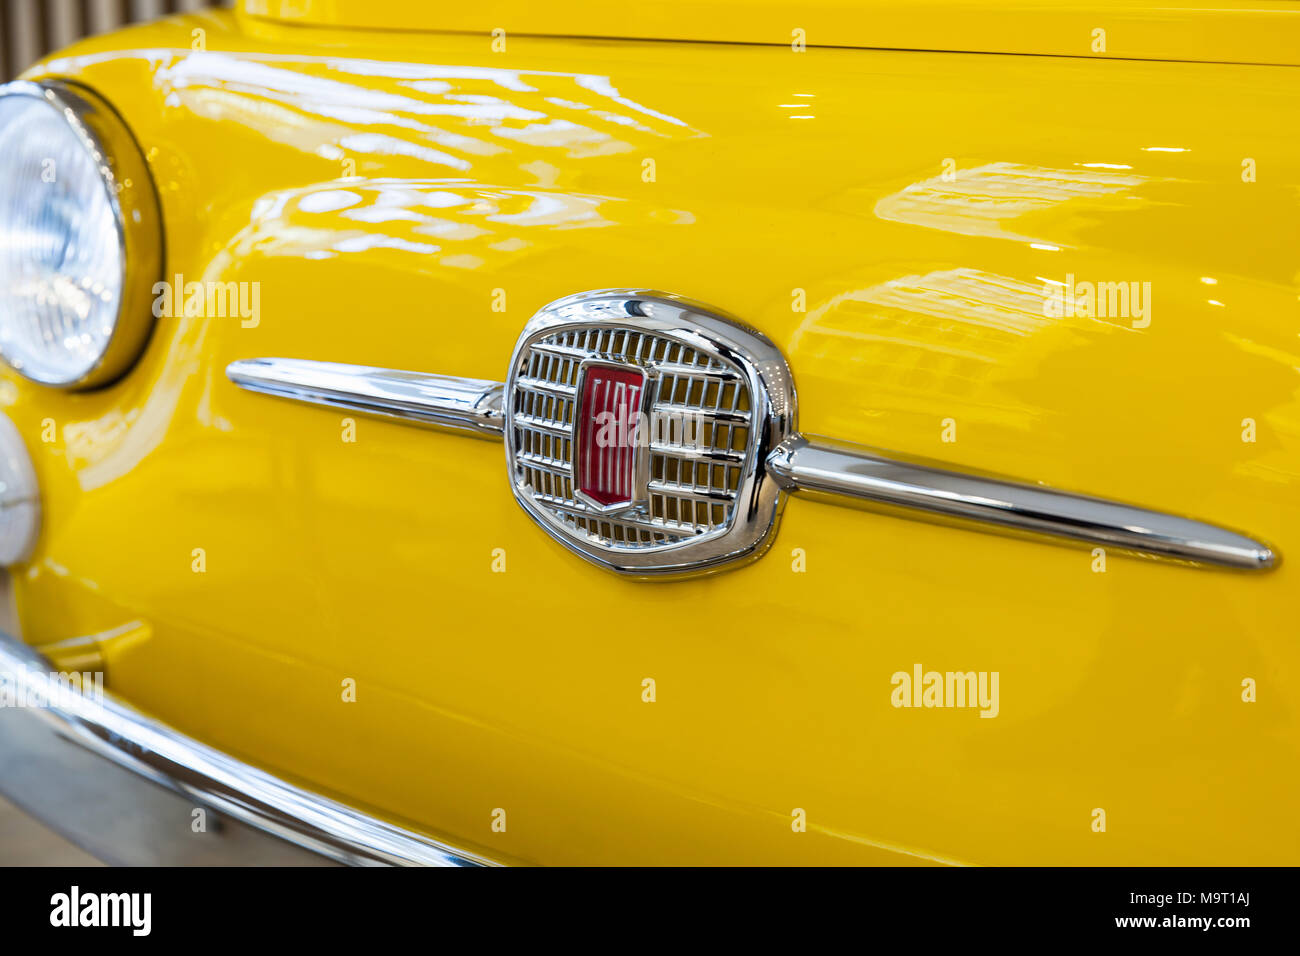 Mailand, Italien - Januar 19, 2018: Fiat Group Company Logo auf gelben Fiat 500 Auto Motorhaube, Nahaufnahme Foto mit selektiven Fokus Stockfoto